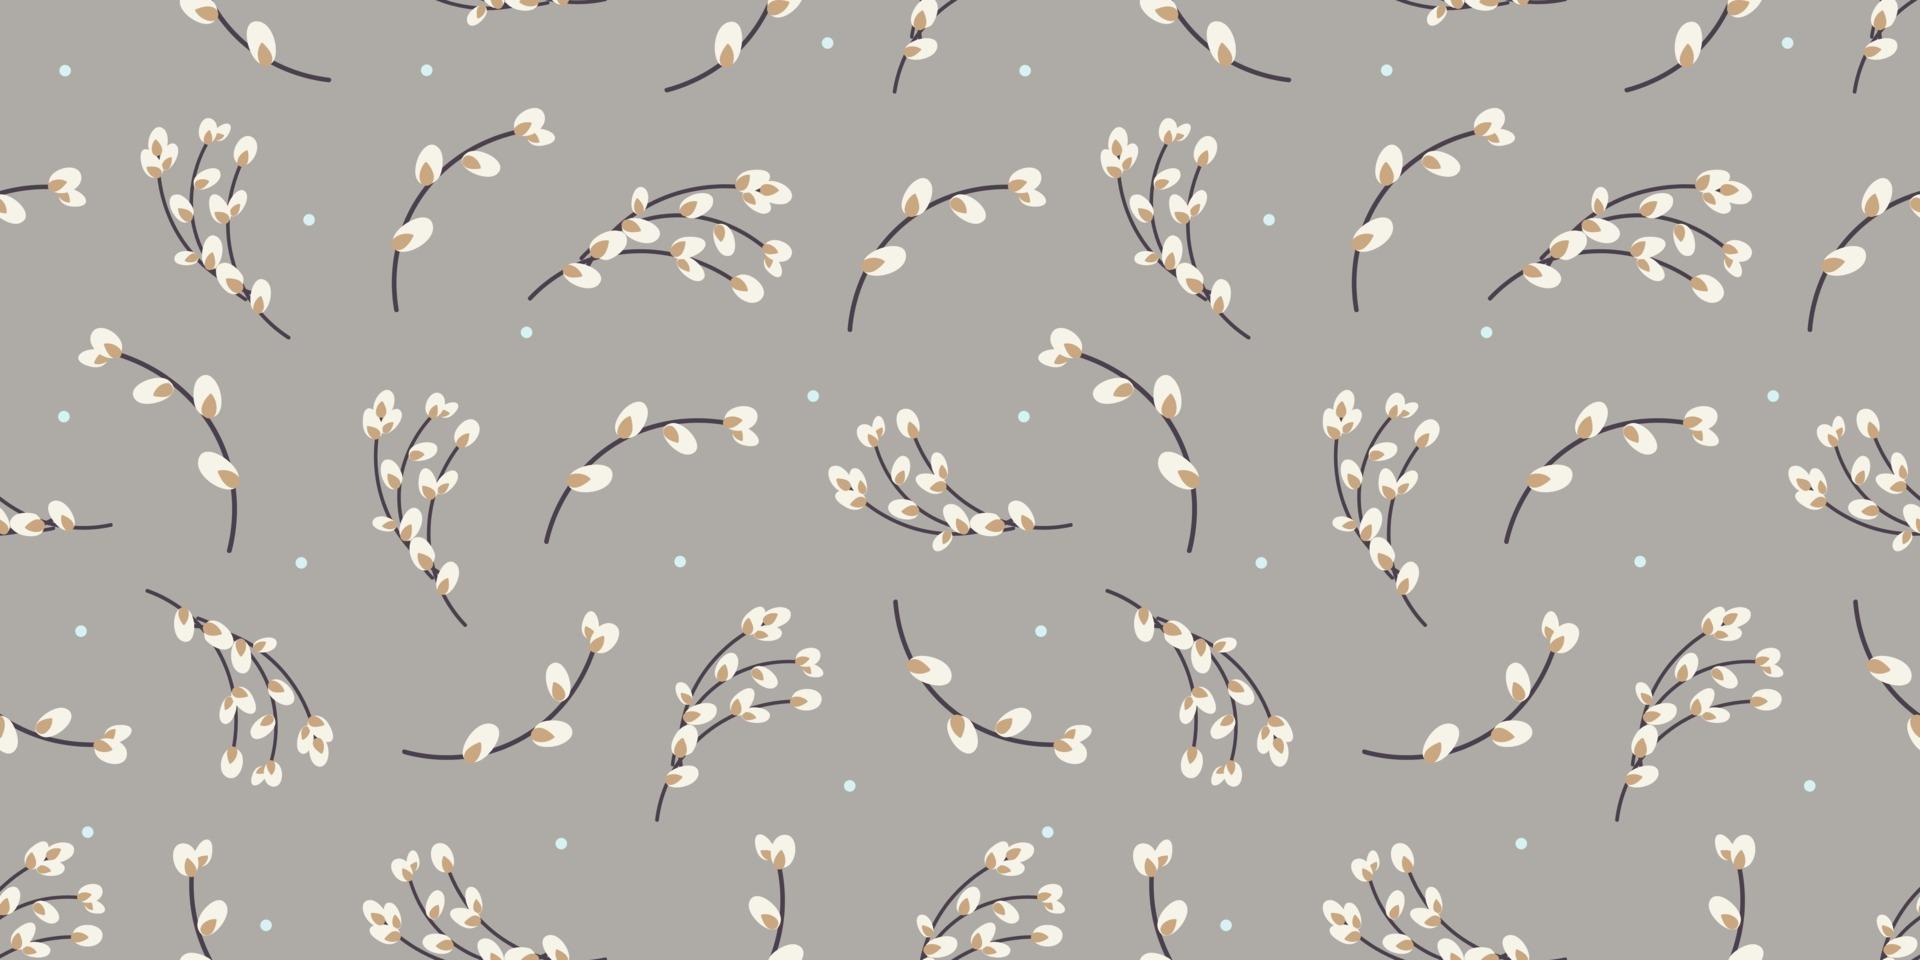 Fondo transparente de ramitas de sauce. ramitas de sauce sobre un fondo gris. patrón de primavera diseño para papel, textiles. vector ilustración plana